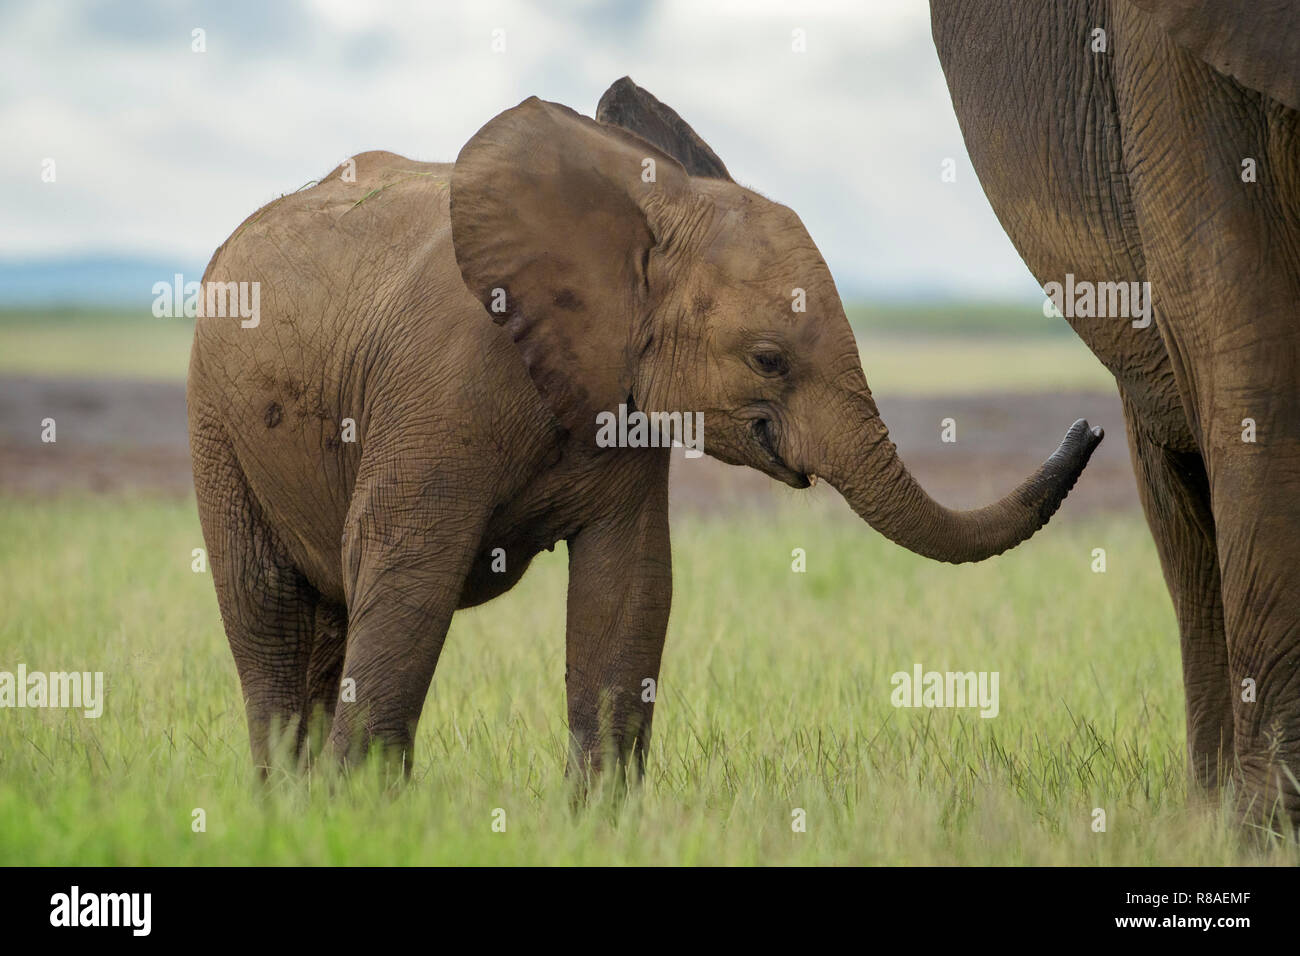 Baby African elephant (Loxodonta africana) going to feed with mother, Amboseli national park, Kenya. Stock Photo